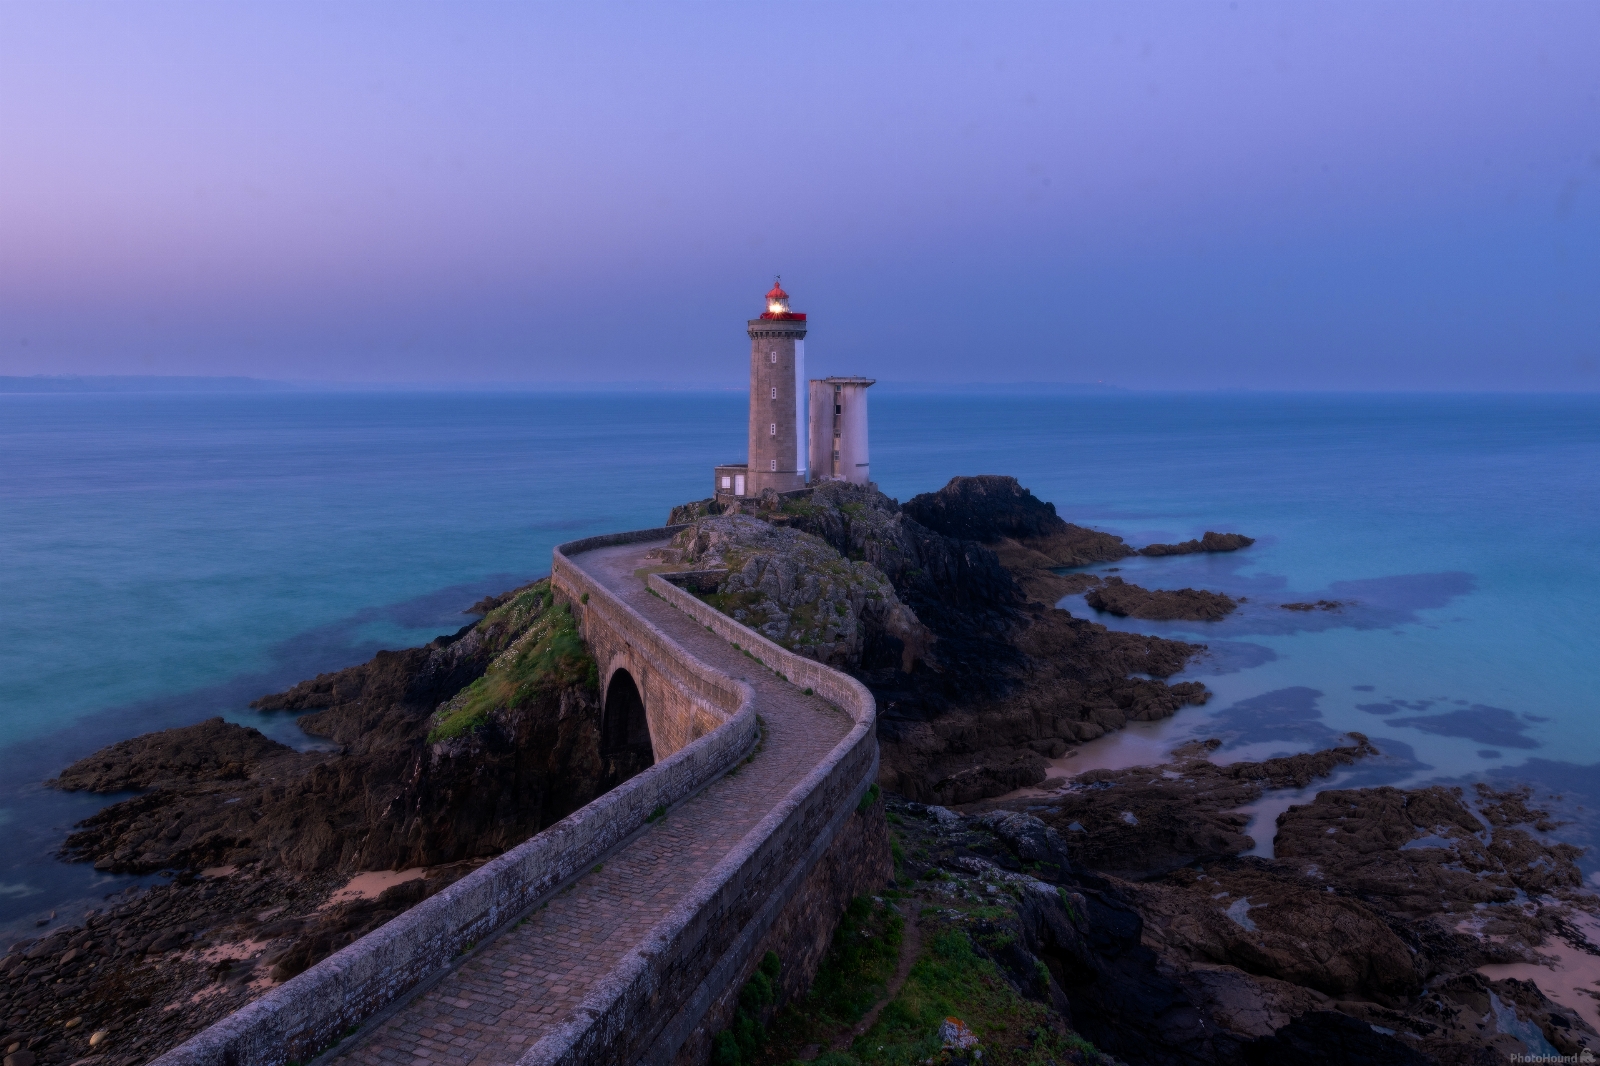 Image of Le Phare du Petit Minou (Lighthouse) by stefania toschi